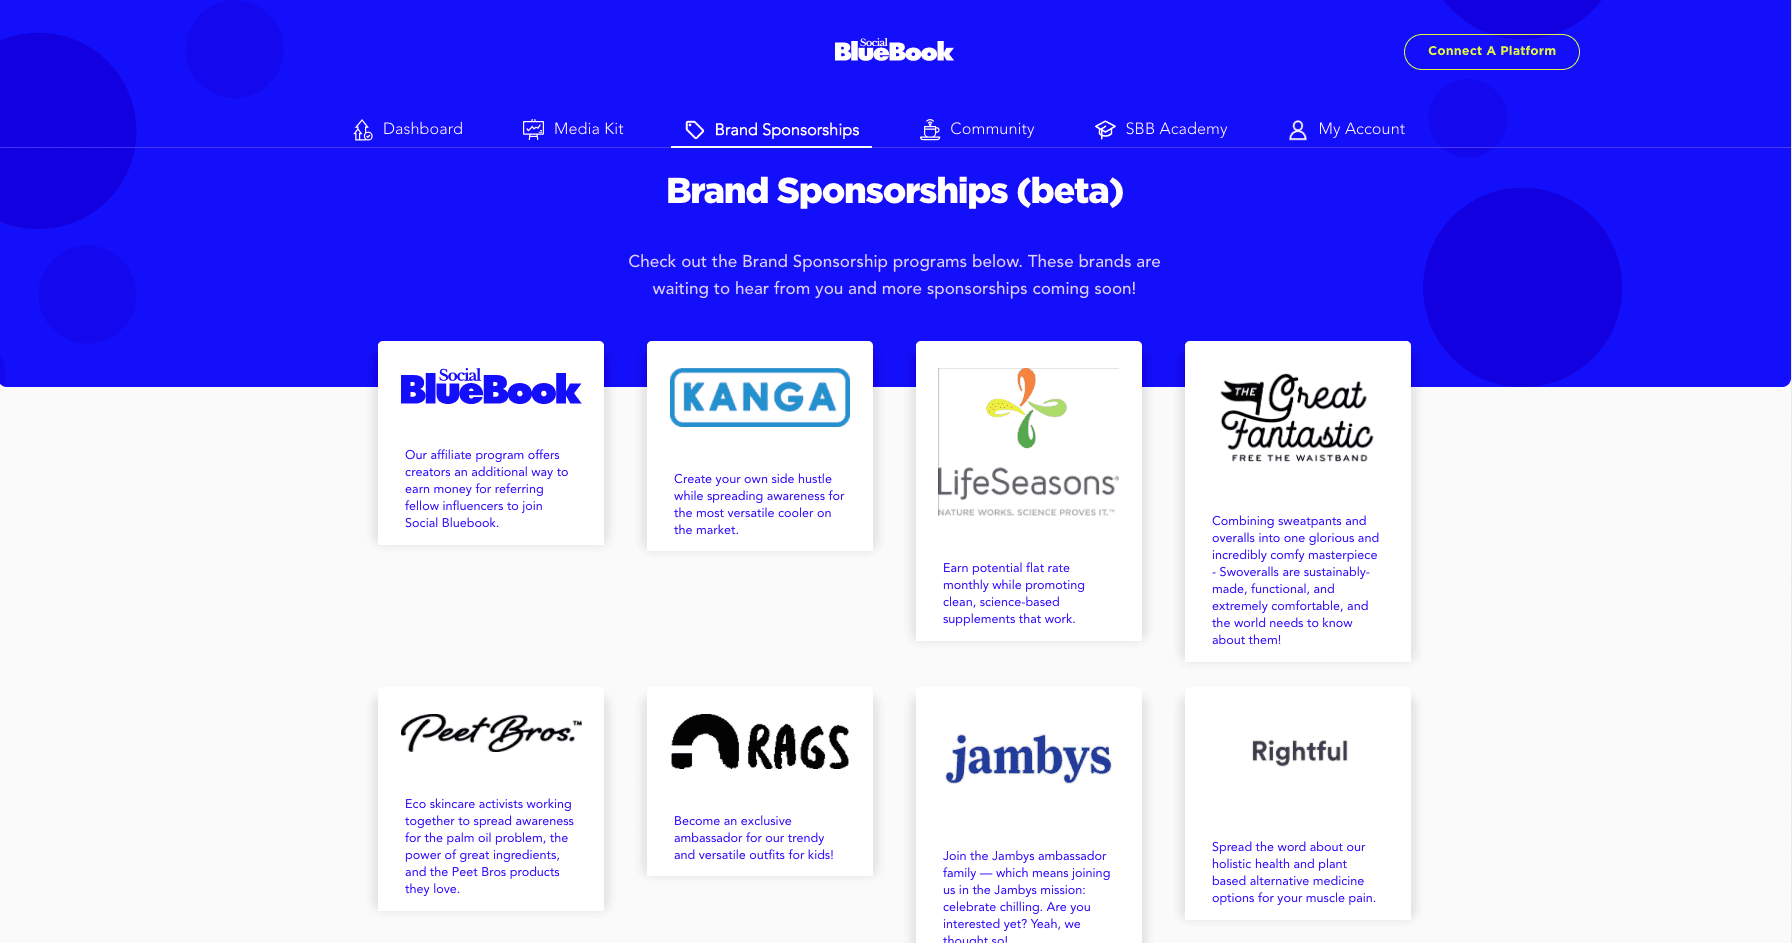 Introducing Brand Sponsorships!